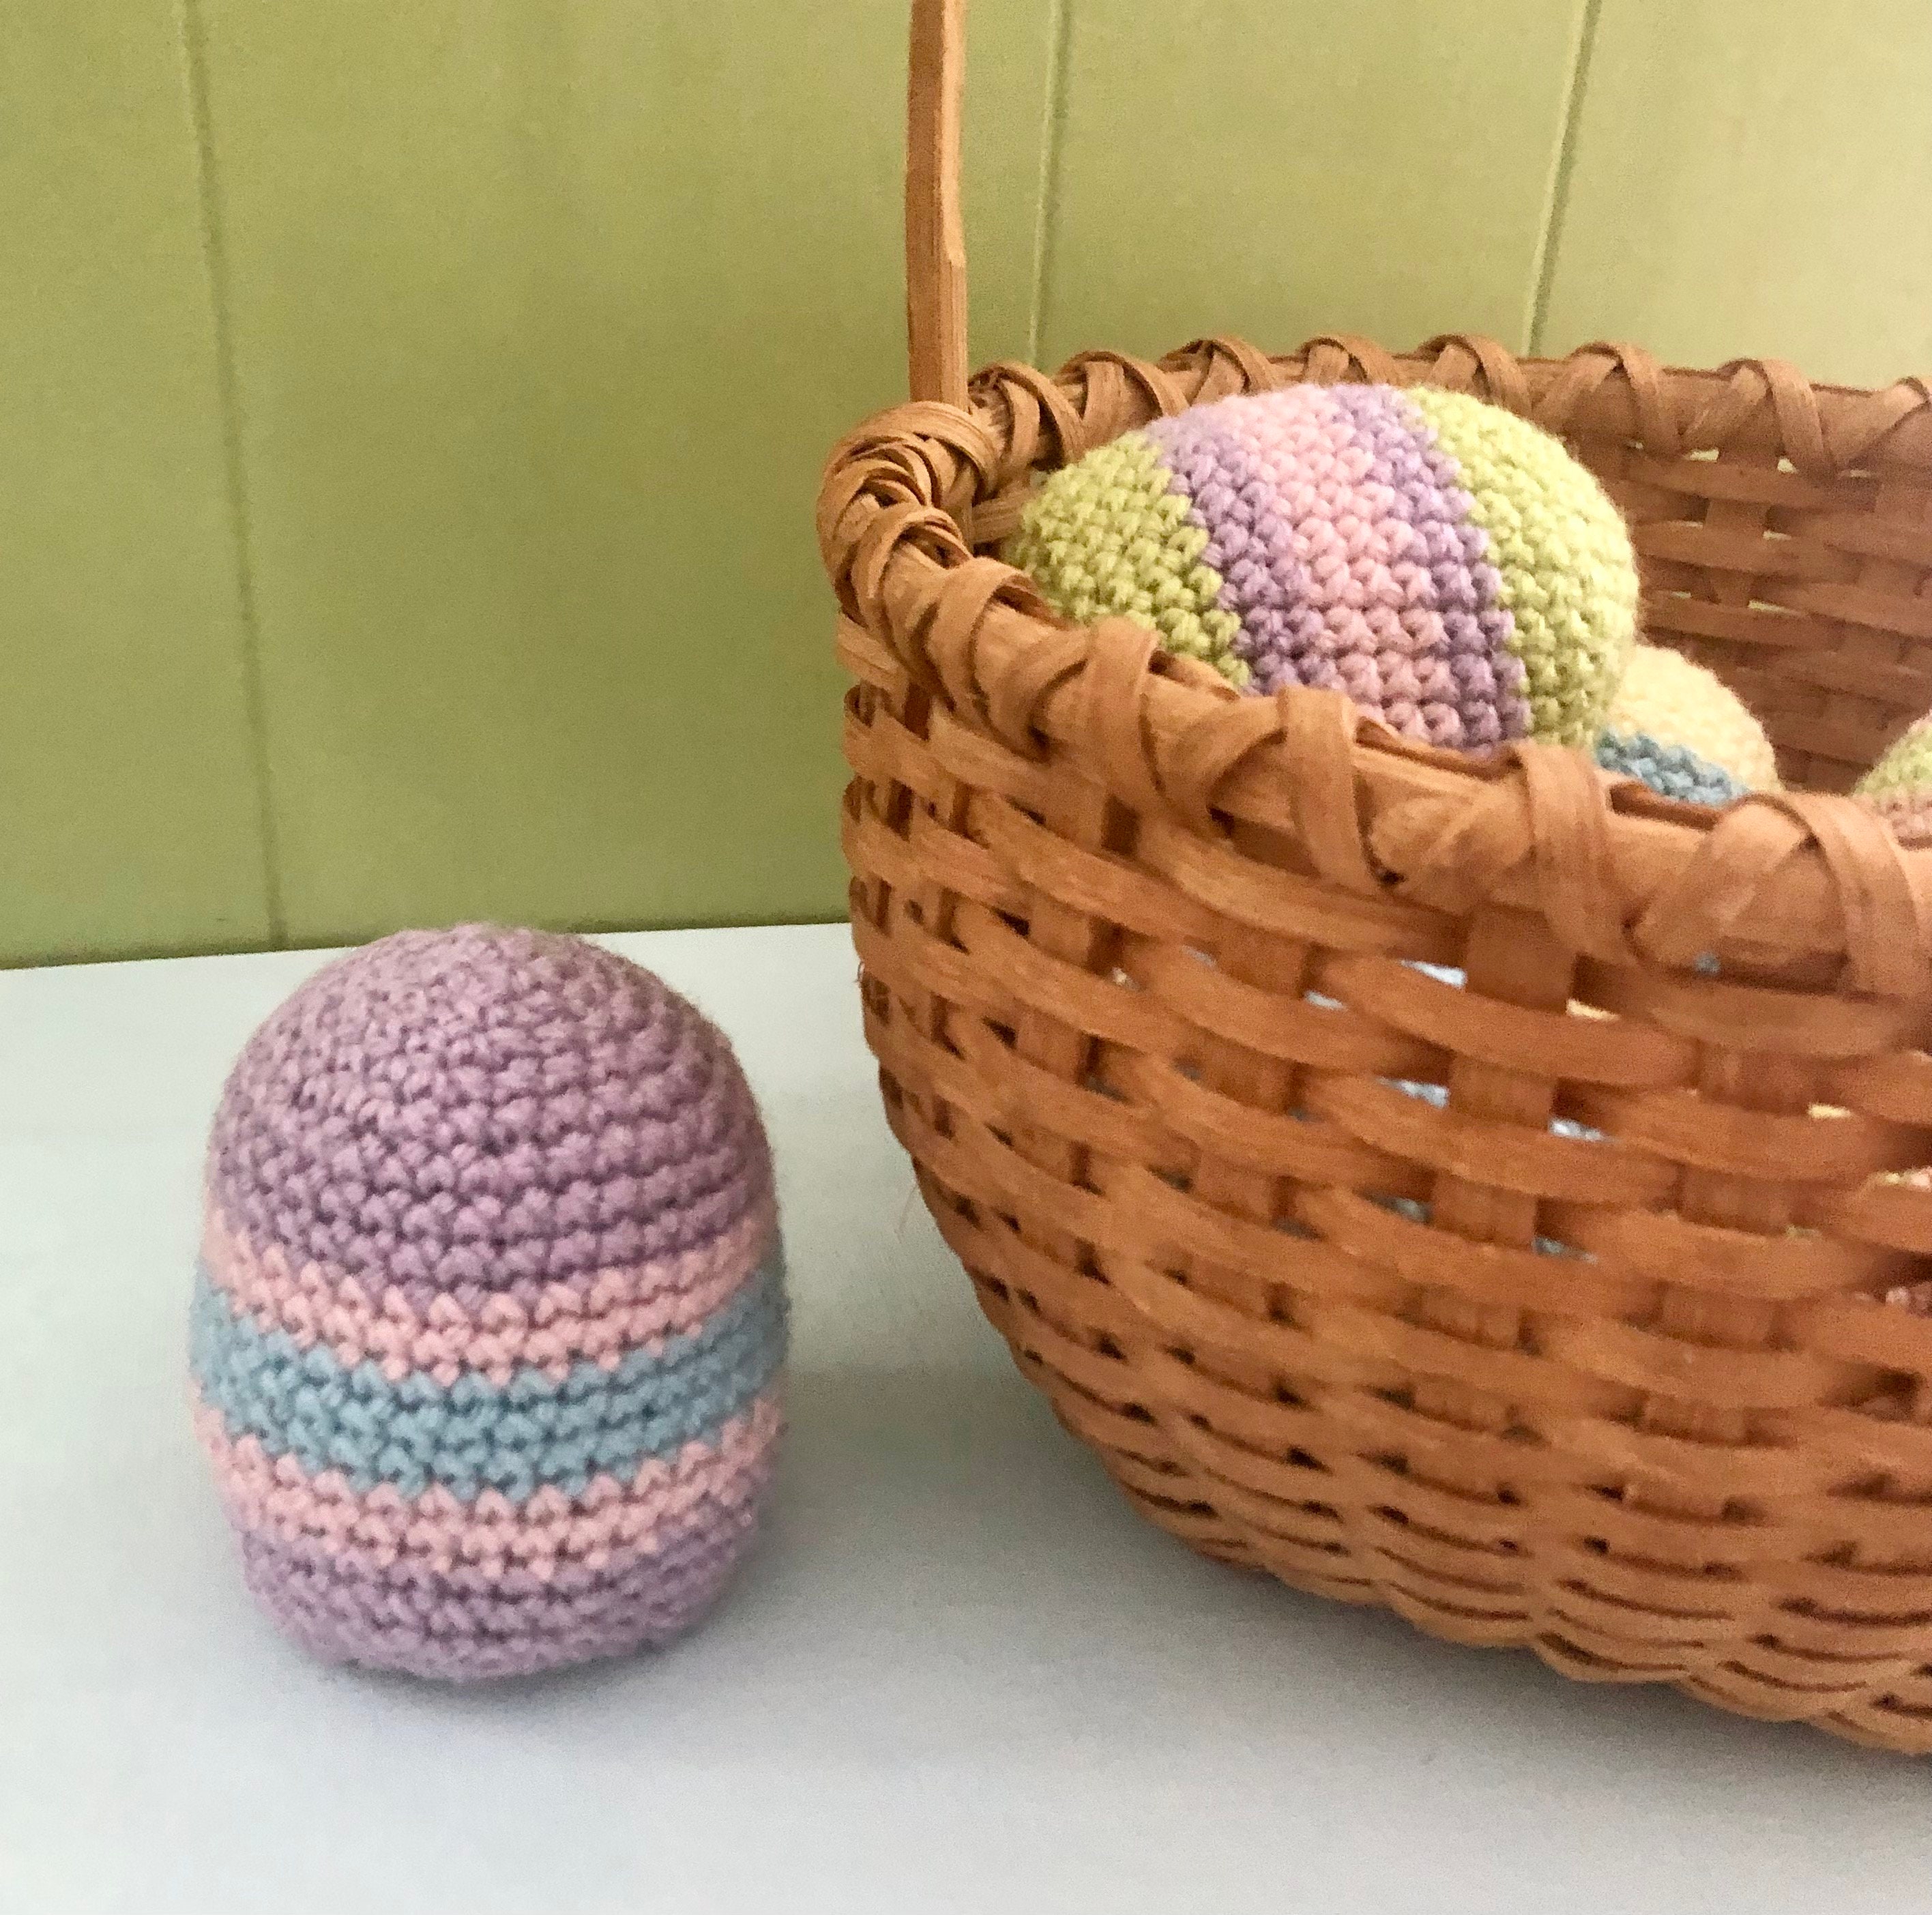 Wheel of Makes, Eggs Benedict #crochet #amigurumi #stitchintogether #yarn 